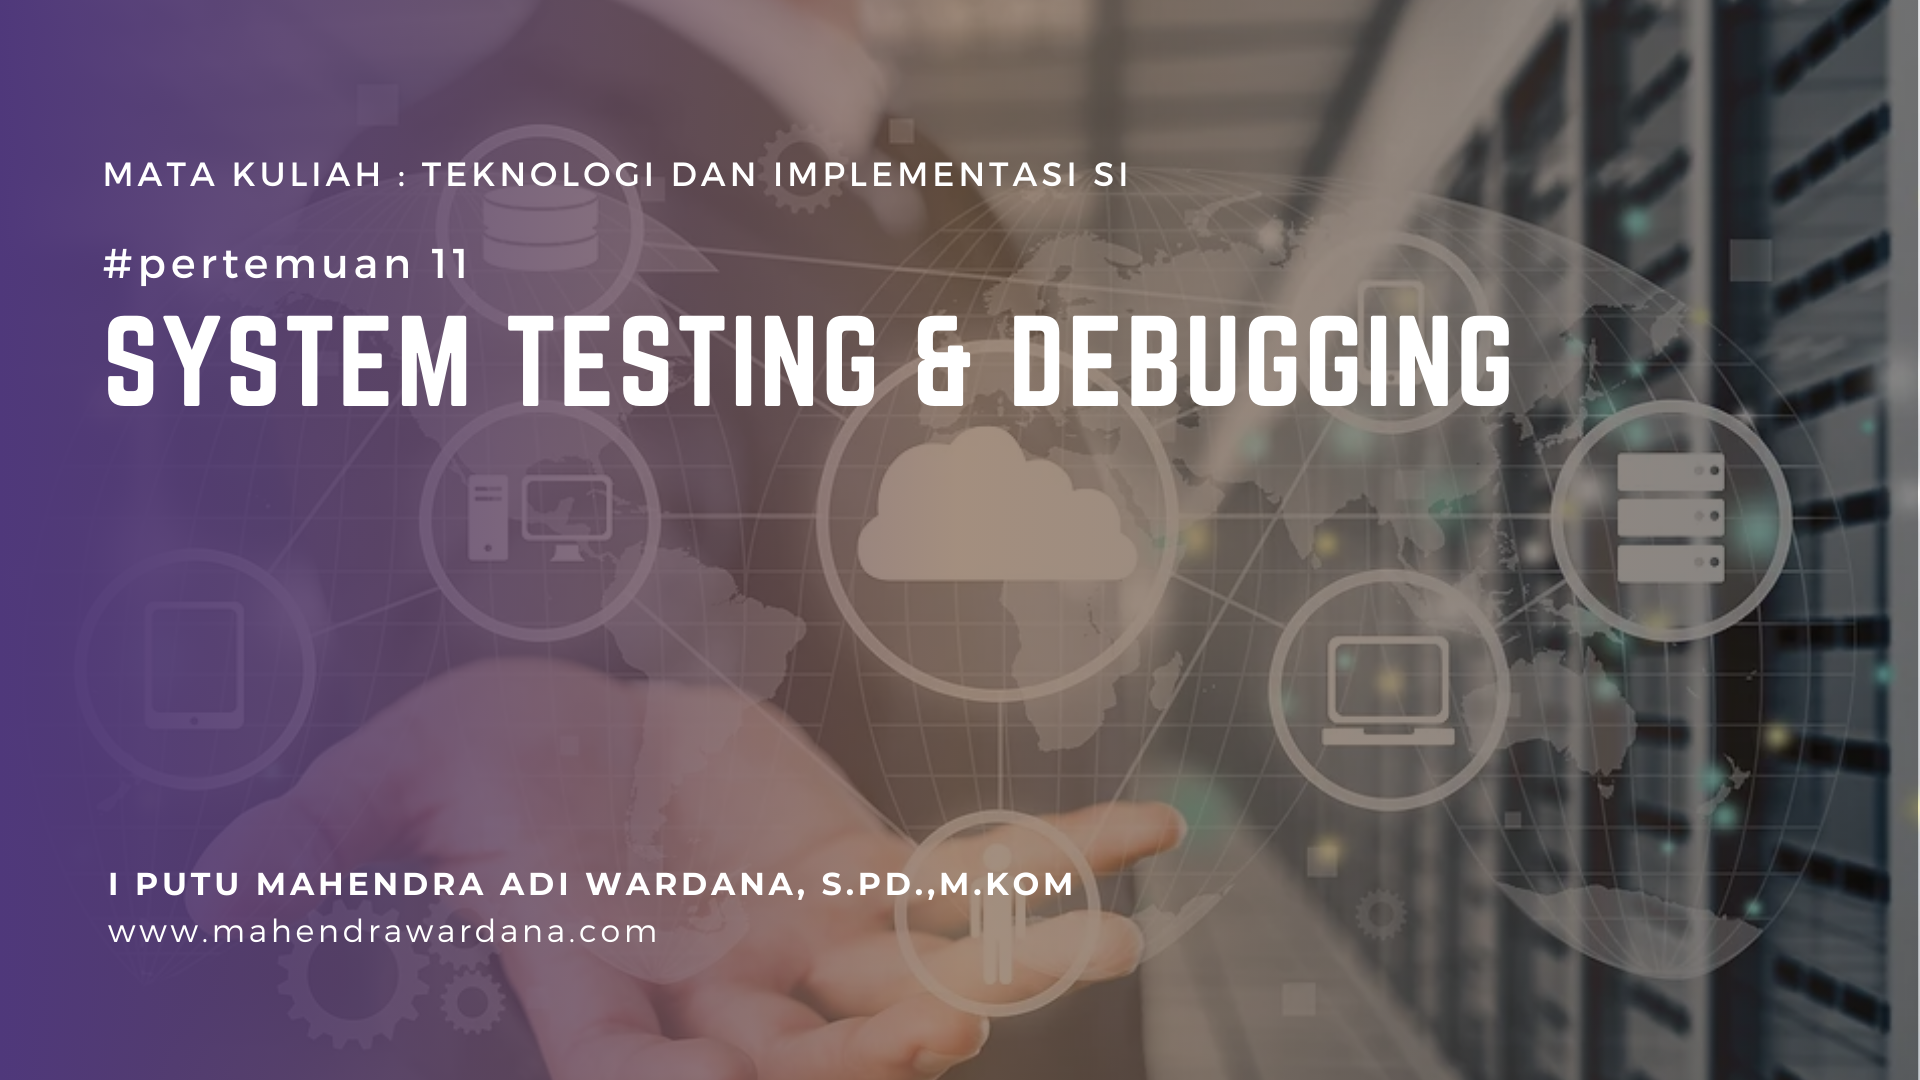 Pertemuan 11 - System Testing & Debugging